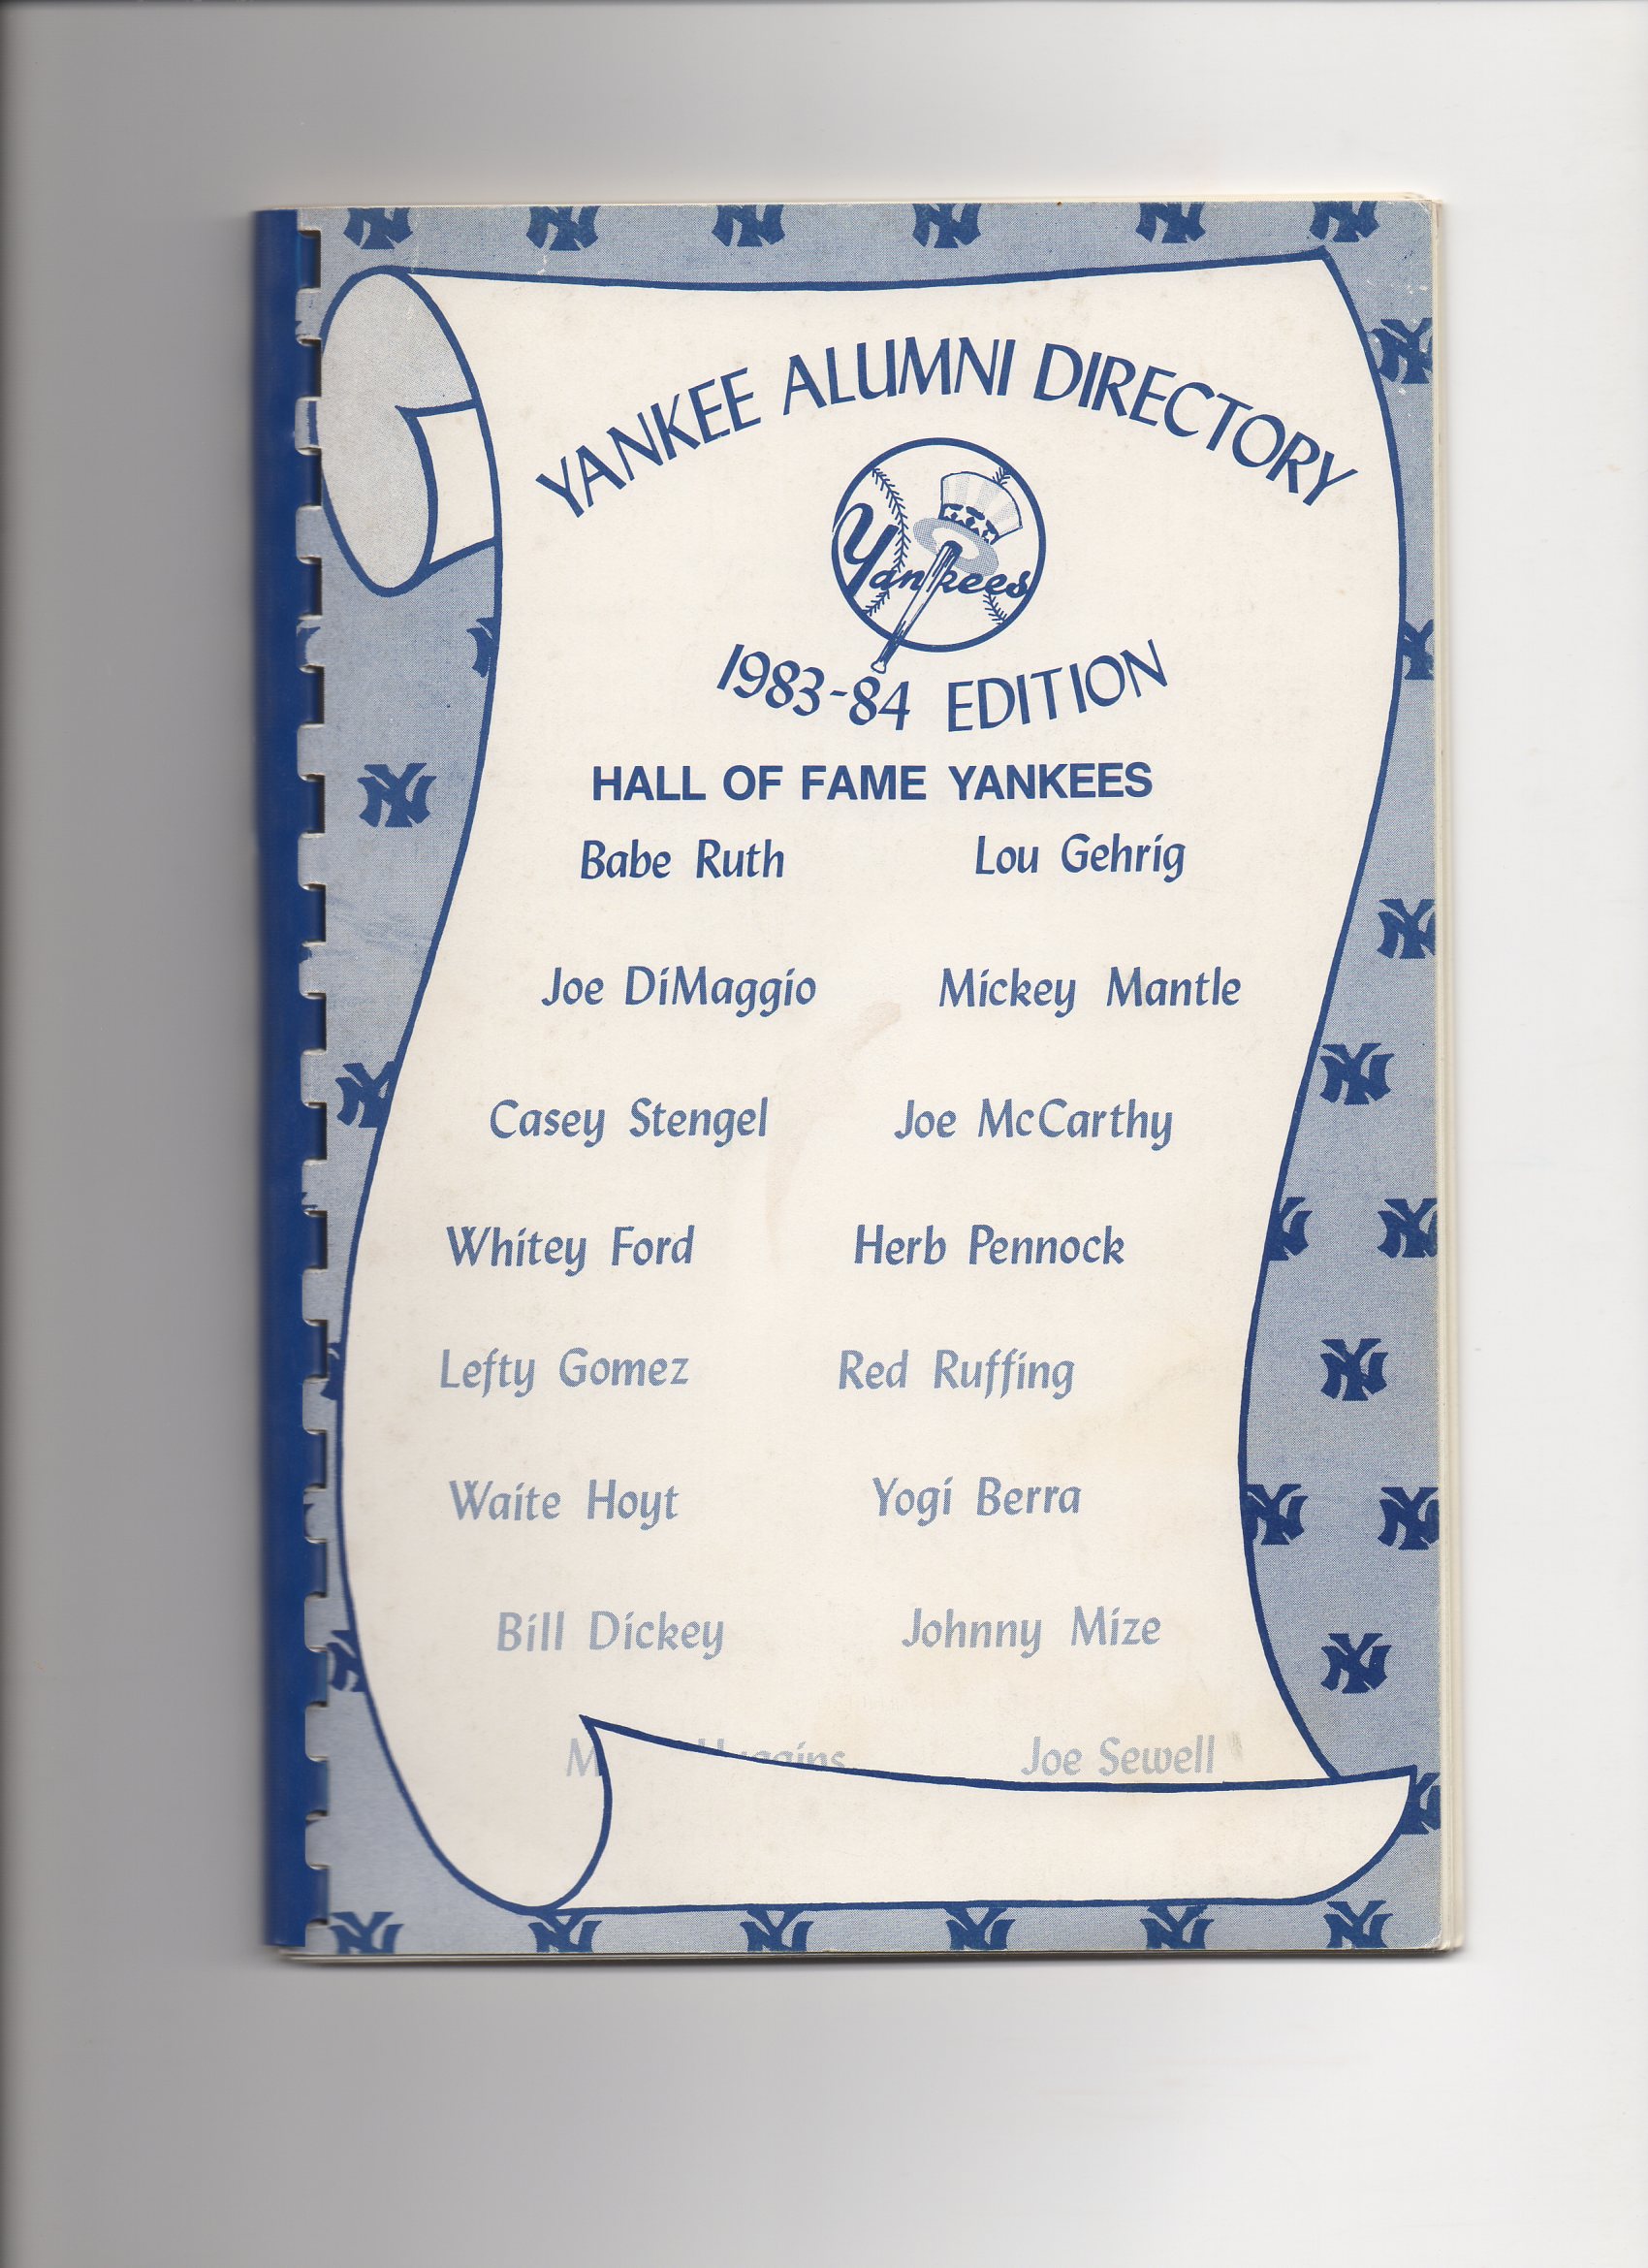 1983 to 1984 yankee alumni directory